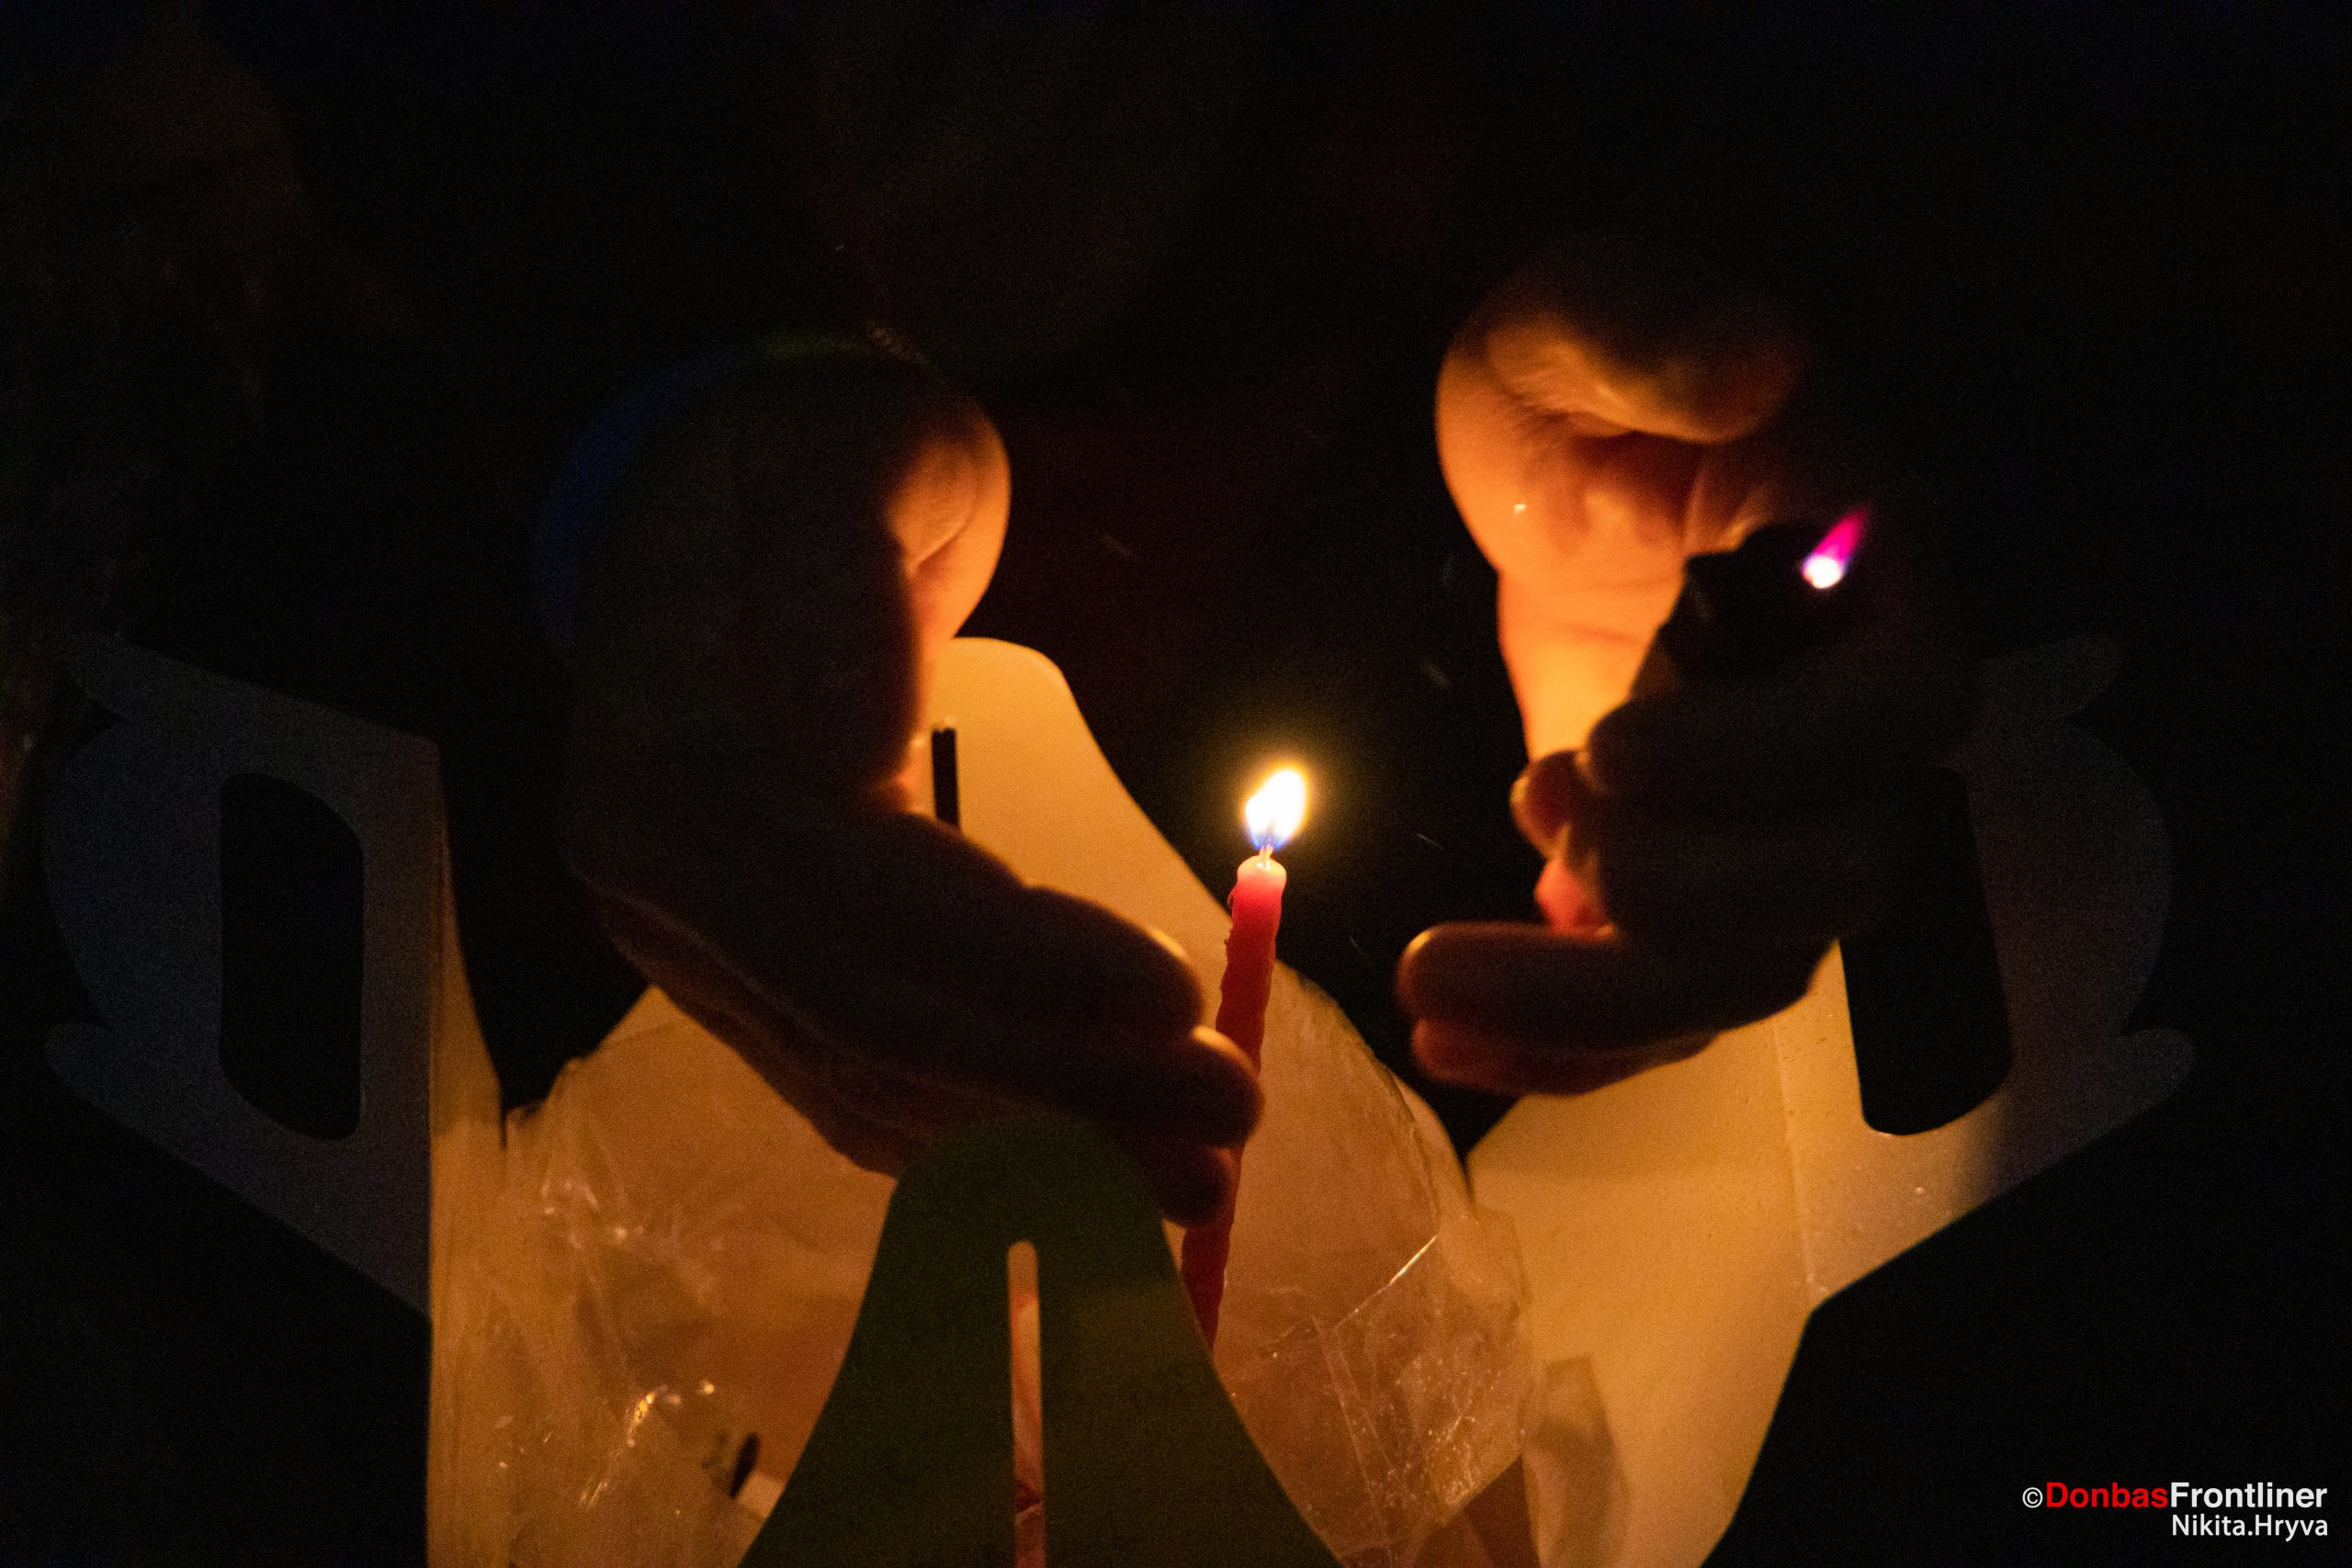 Donbas Frontliner / Володимирська церква: великодня свічка